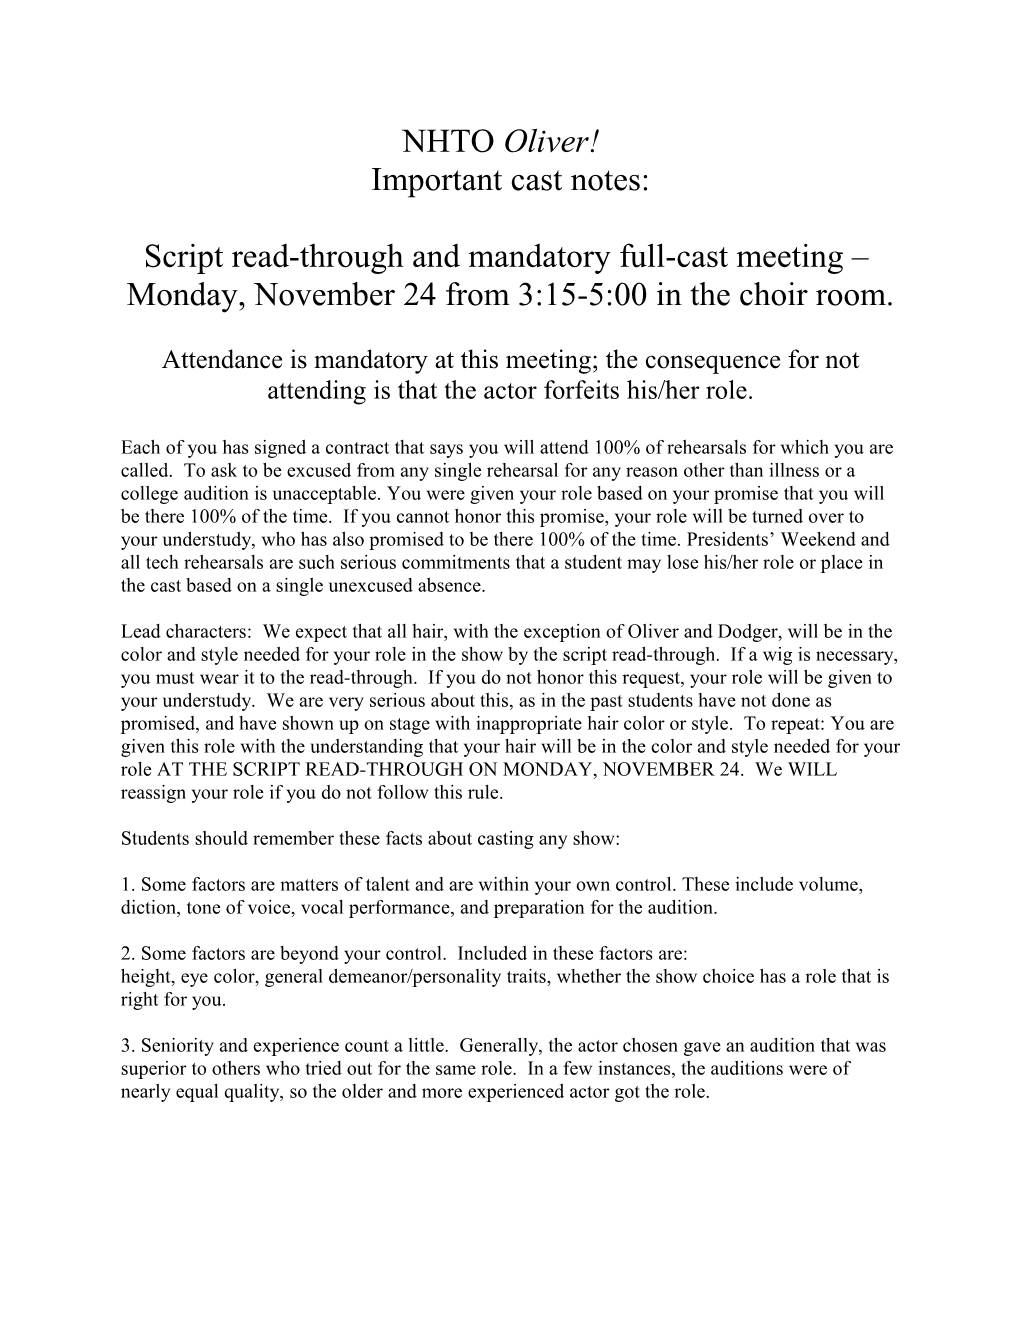 Script Read-Through and Mandatory Full-Cast Meeting